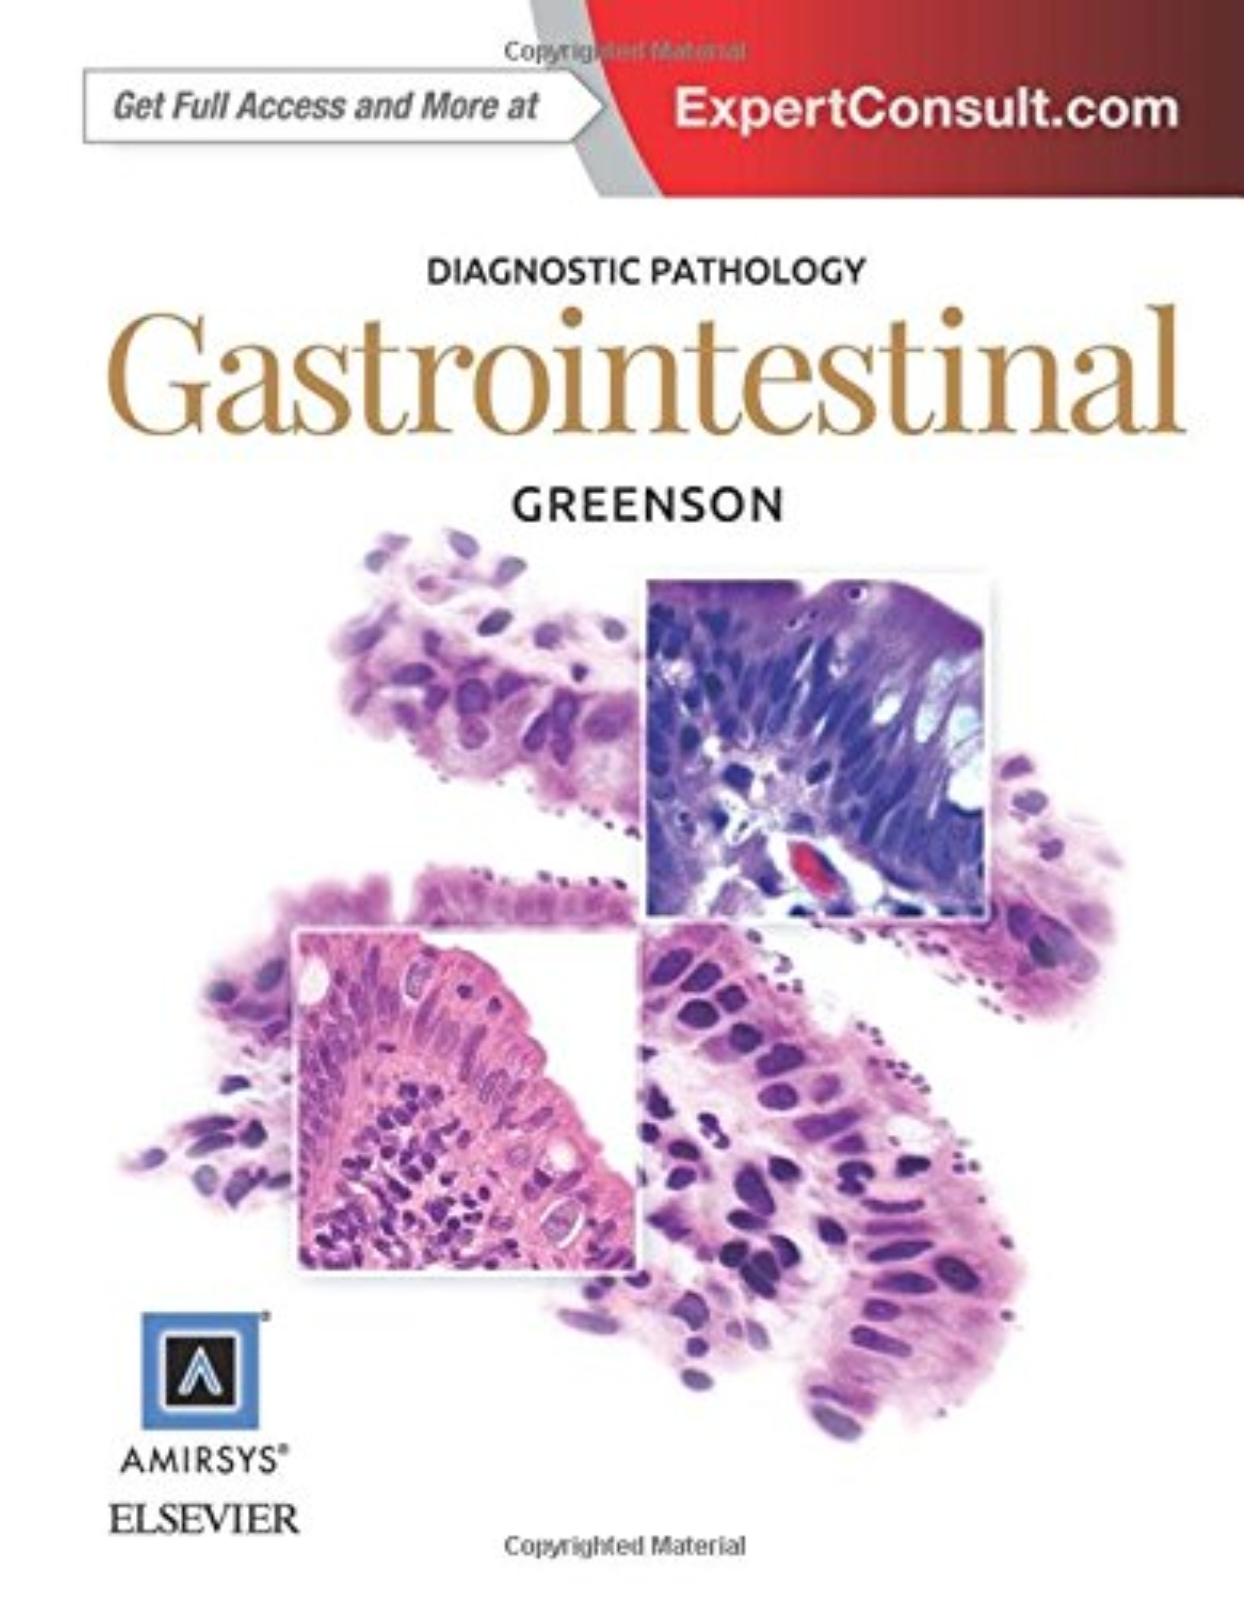 Diagnostic Pathology: Gastrointestinal